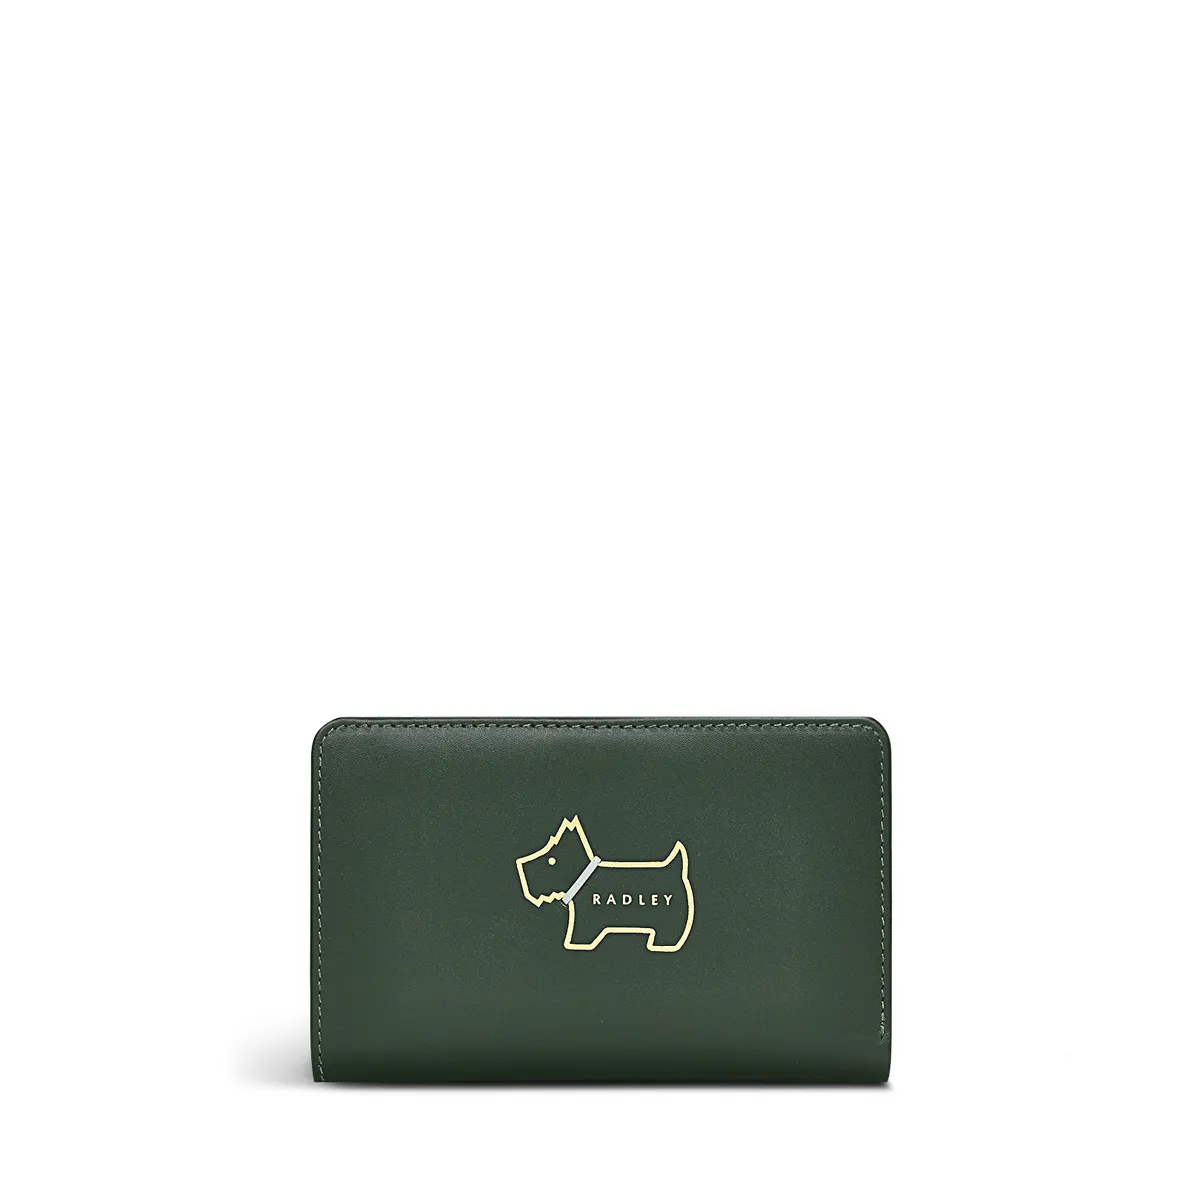 RADLEY London Pockets 2.0 - Medium Ziptop Crossbody: Handbags: Amazon.com